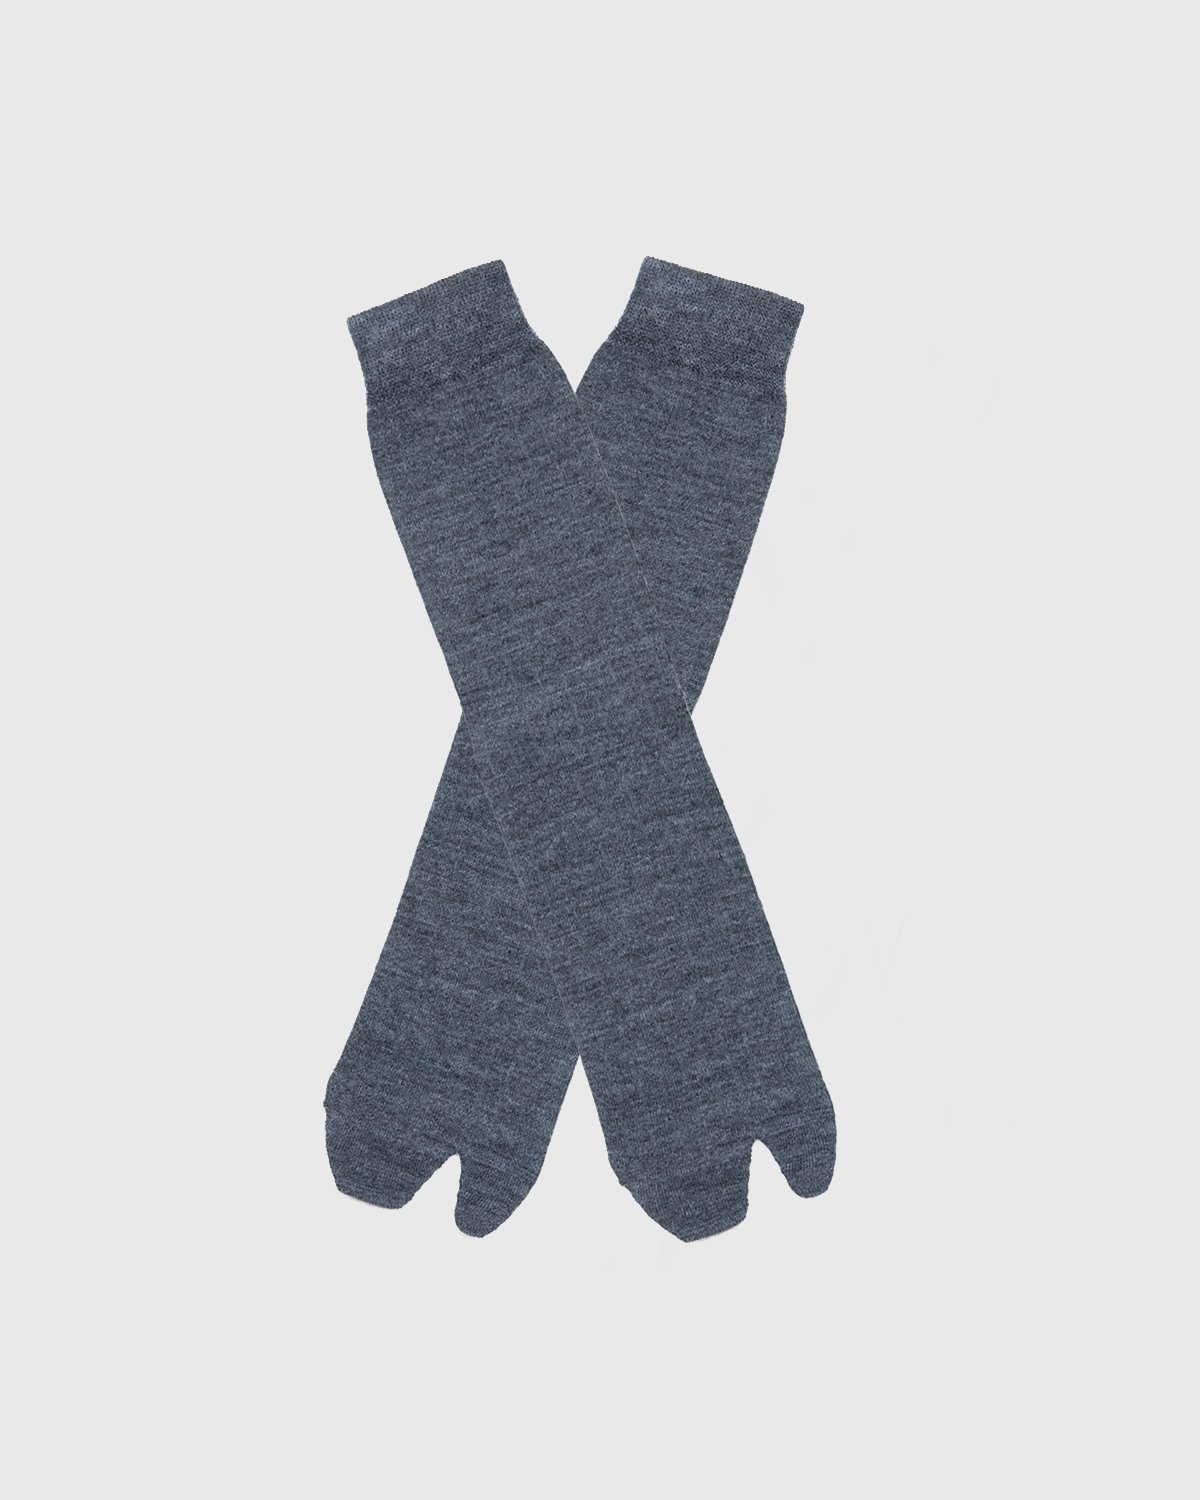 Maison Margiela – Tabi Socks Grey - Socks - Grey - Image 2